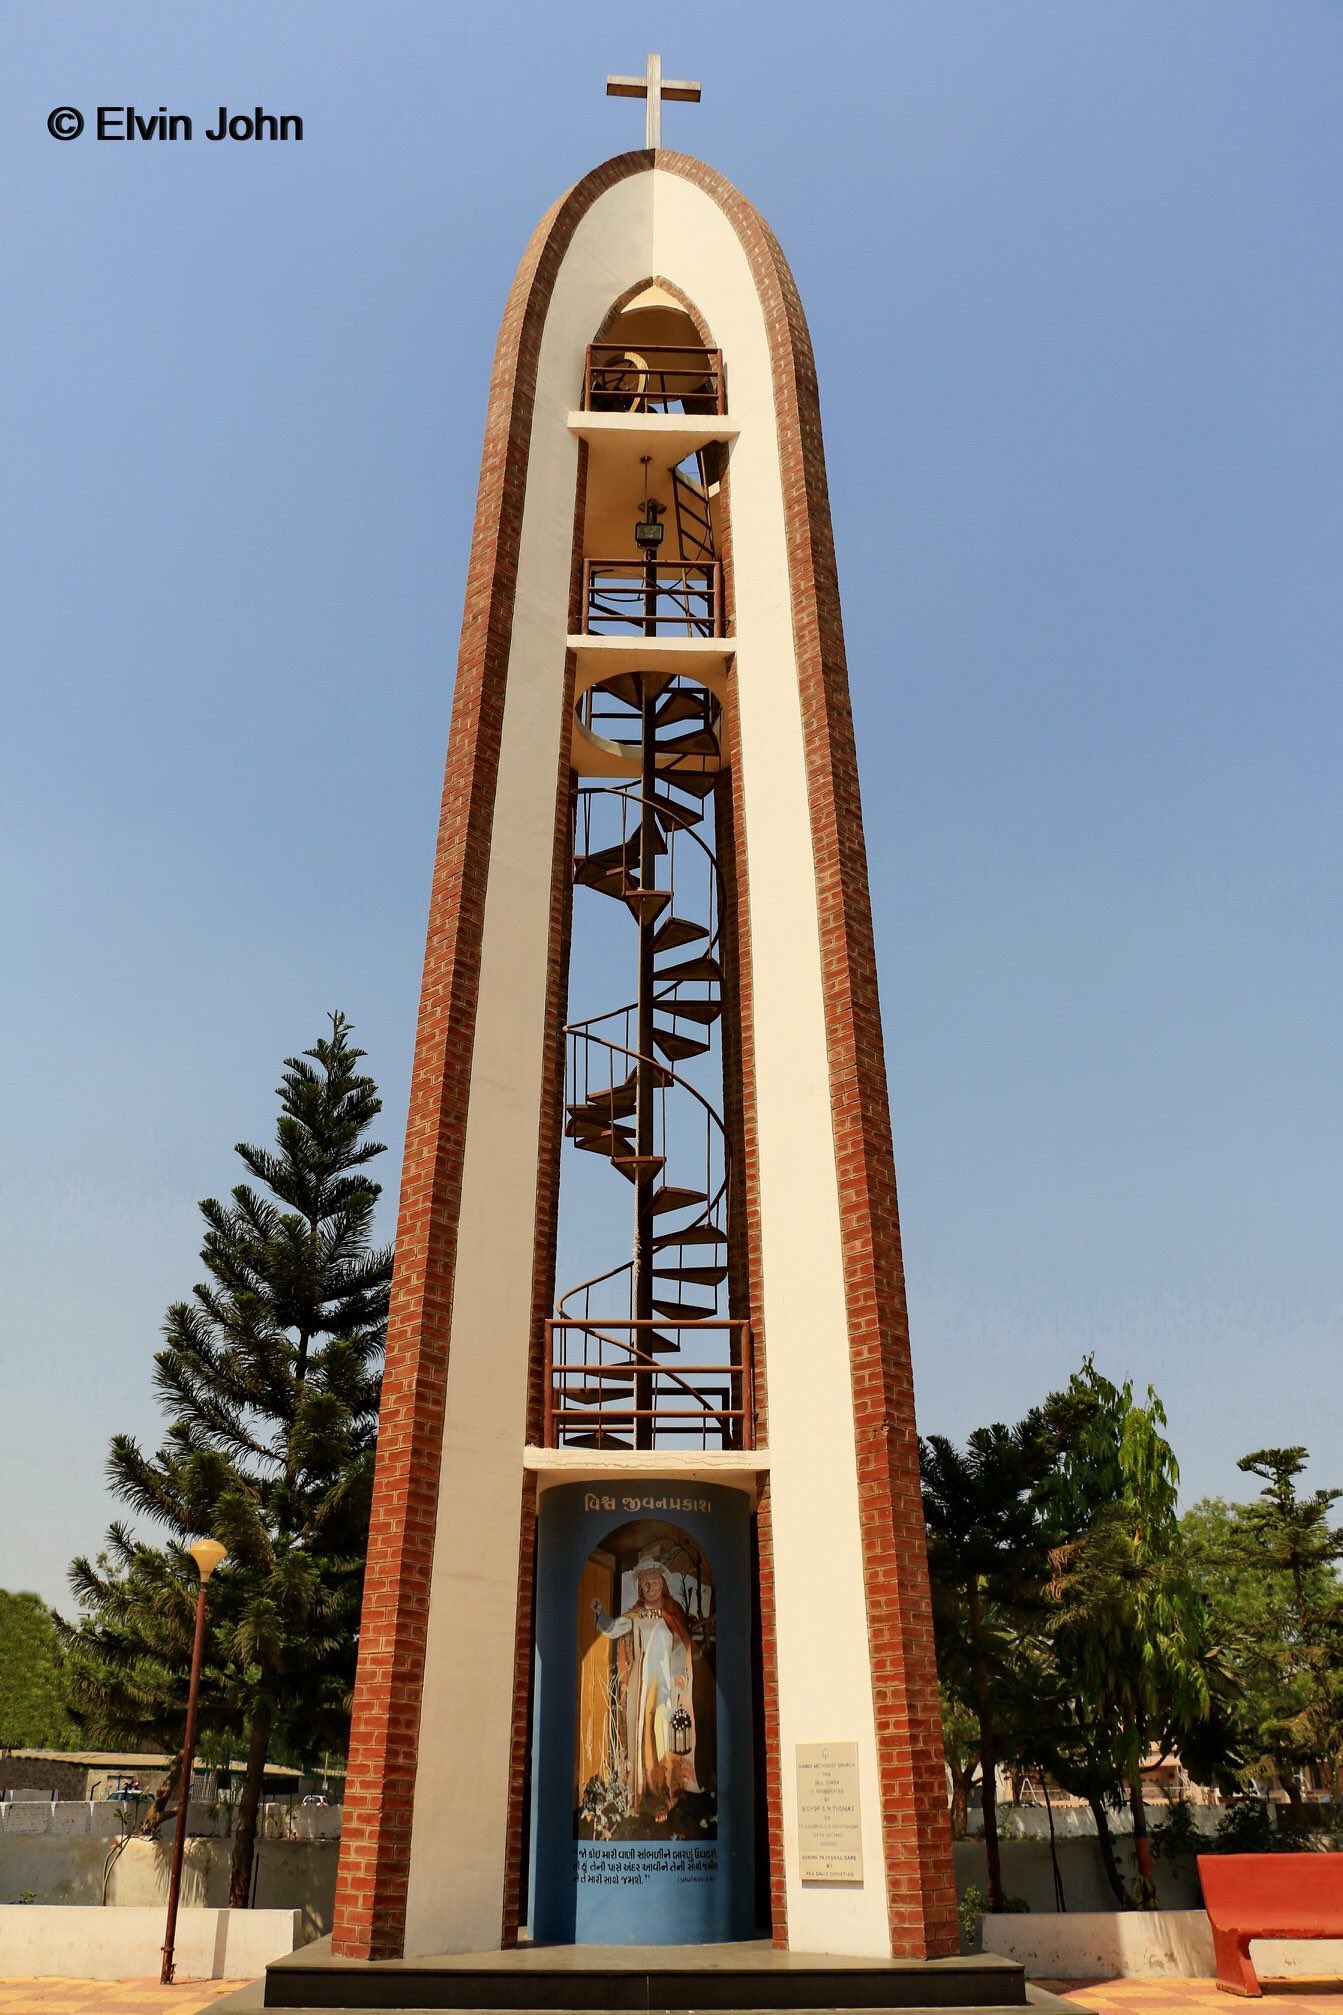 Baroda Rocks On Twitter: "Merry Christmas ;) "The Bell Tower" - Sharon Methodist Church, Nizampura, #Vadodara #Sharonmethodistchurch Pc : Elvin John Https://T.co/9Ljvm6Tkaw" / Twitter